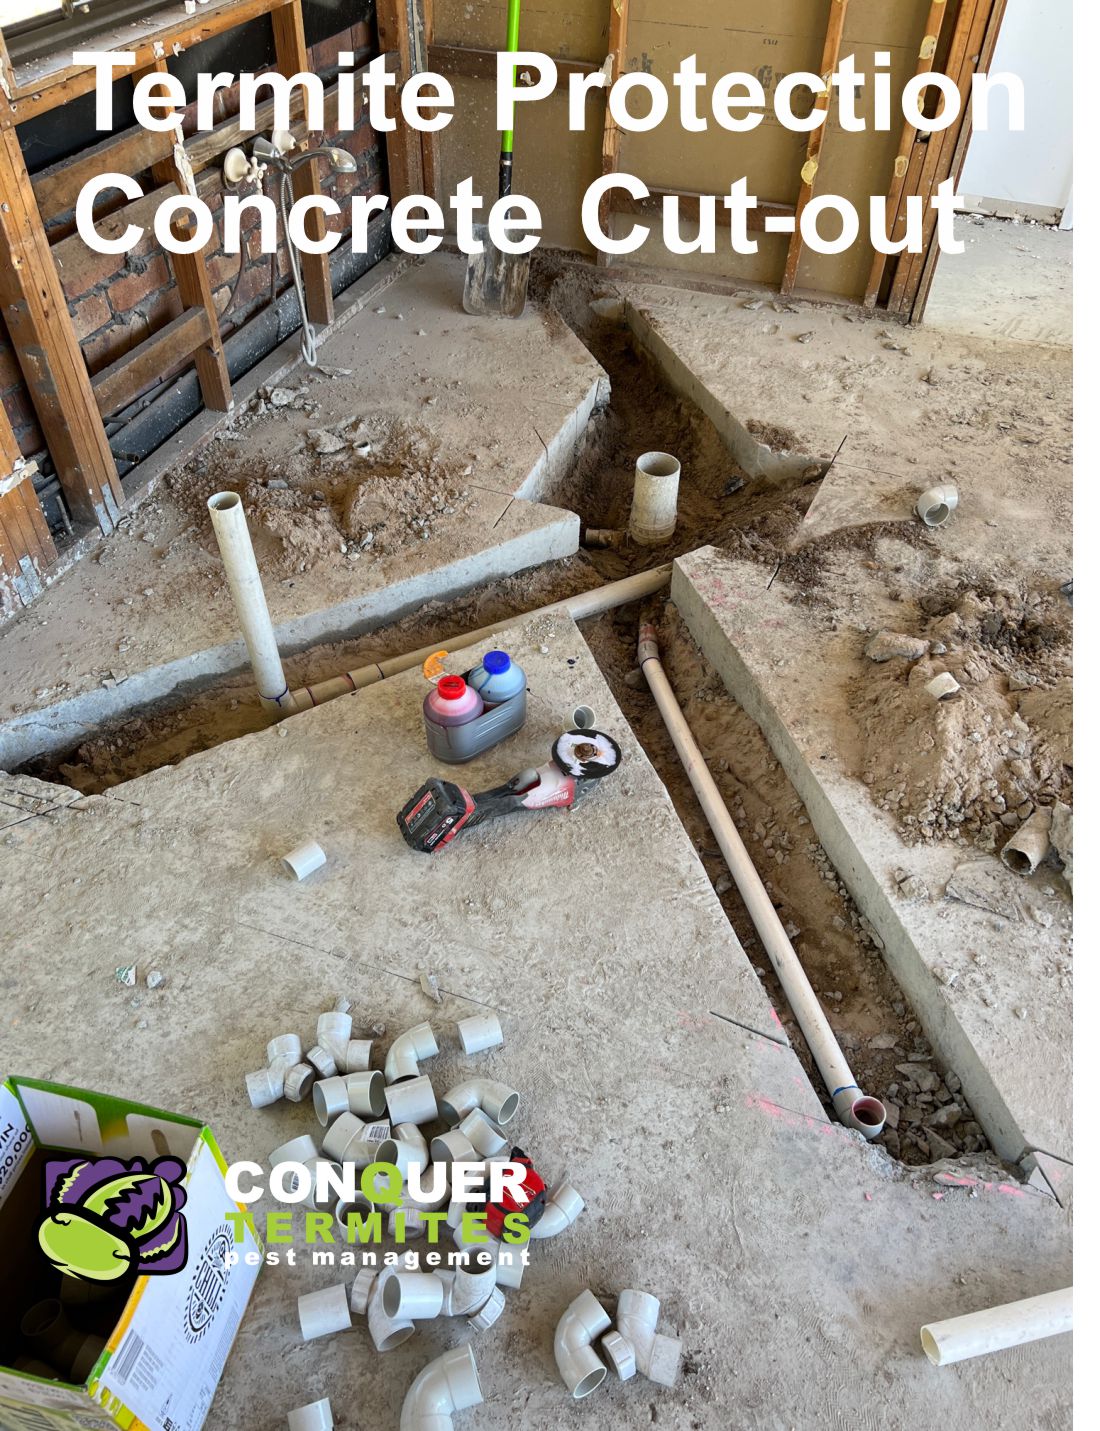 Termite Protection for Concrete Slab Cut-outs - Brisbane